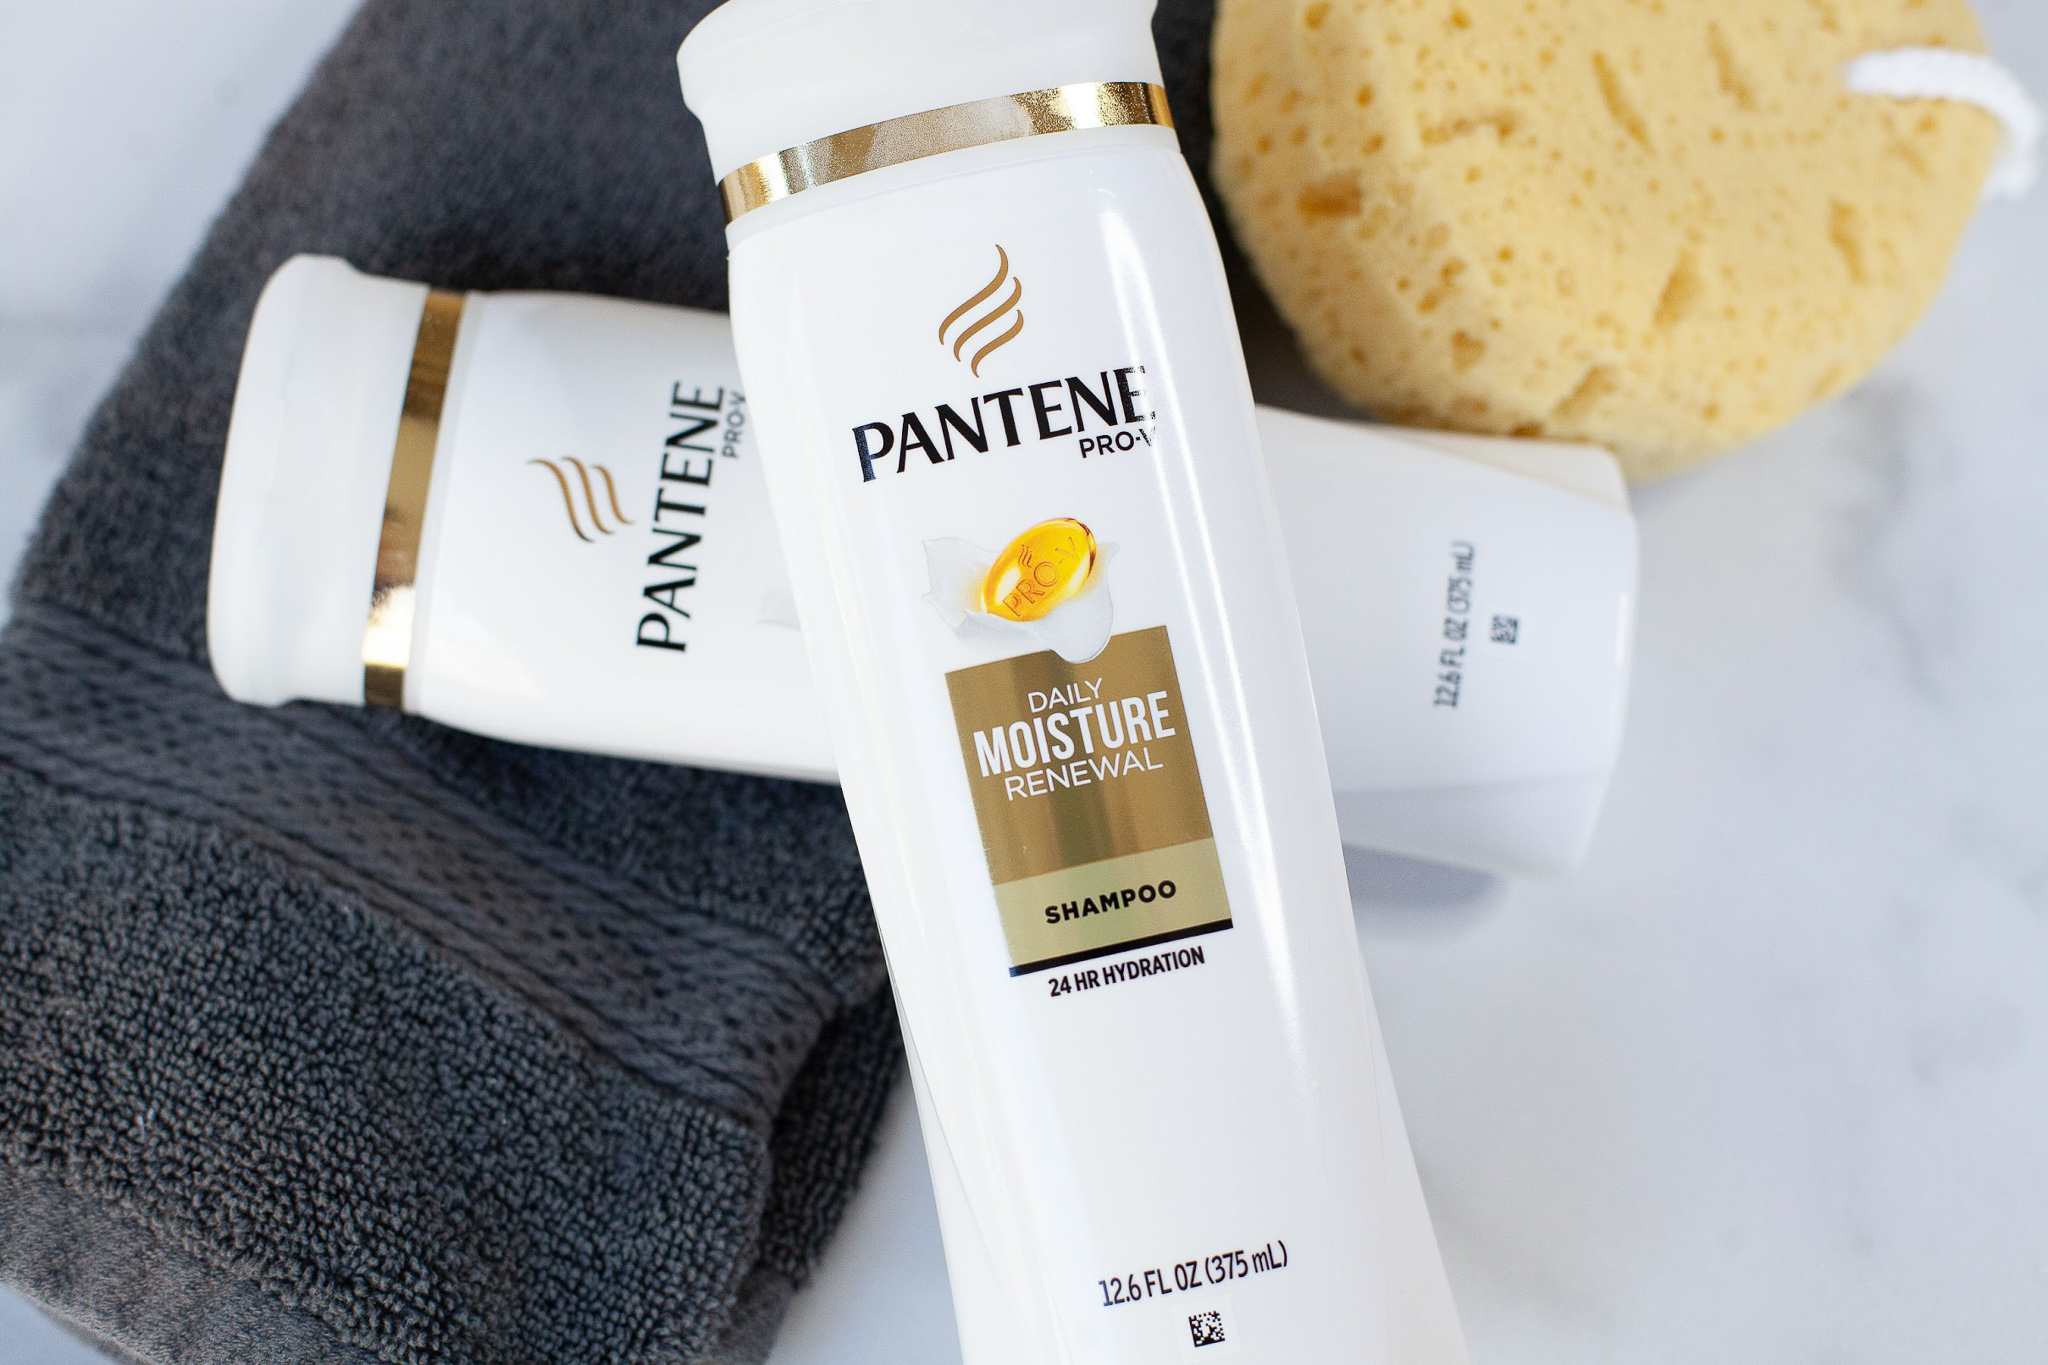 Get Pantene Hair Care As Low As $3.13 At Publix